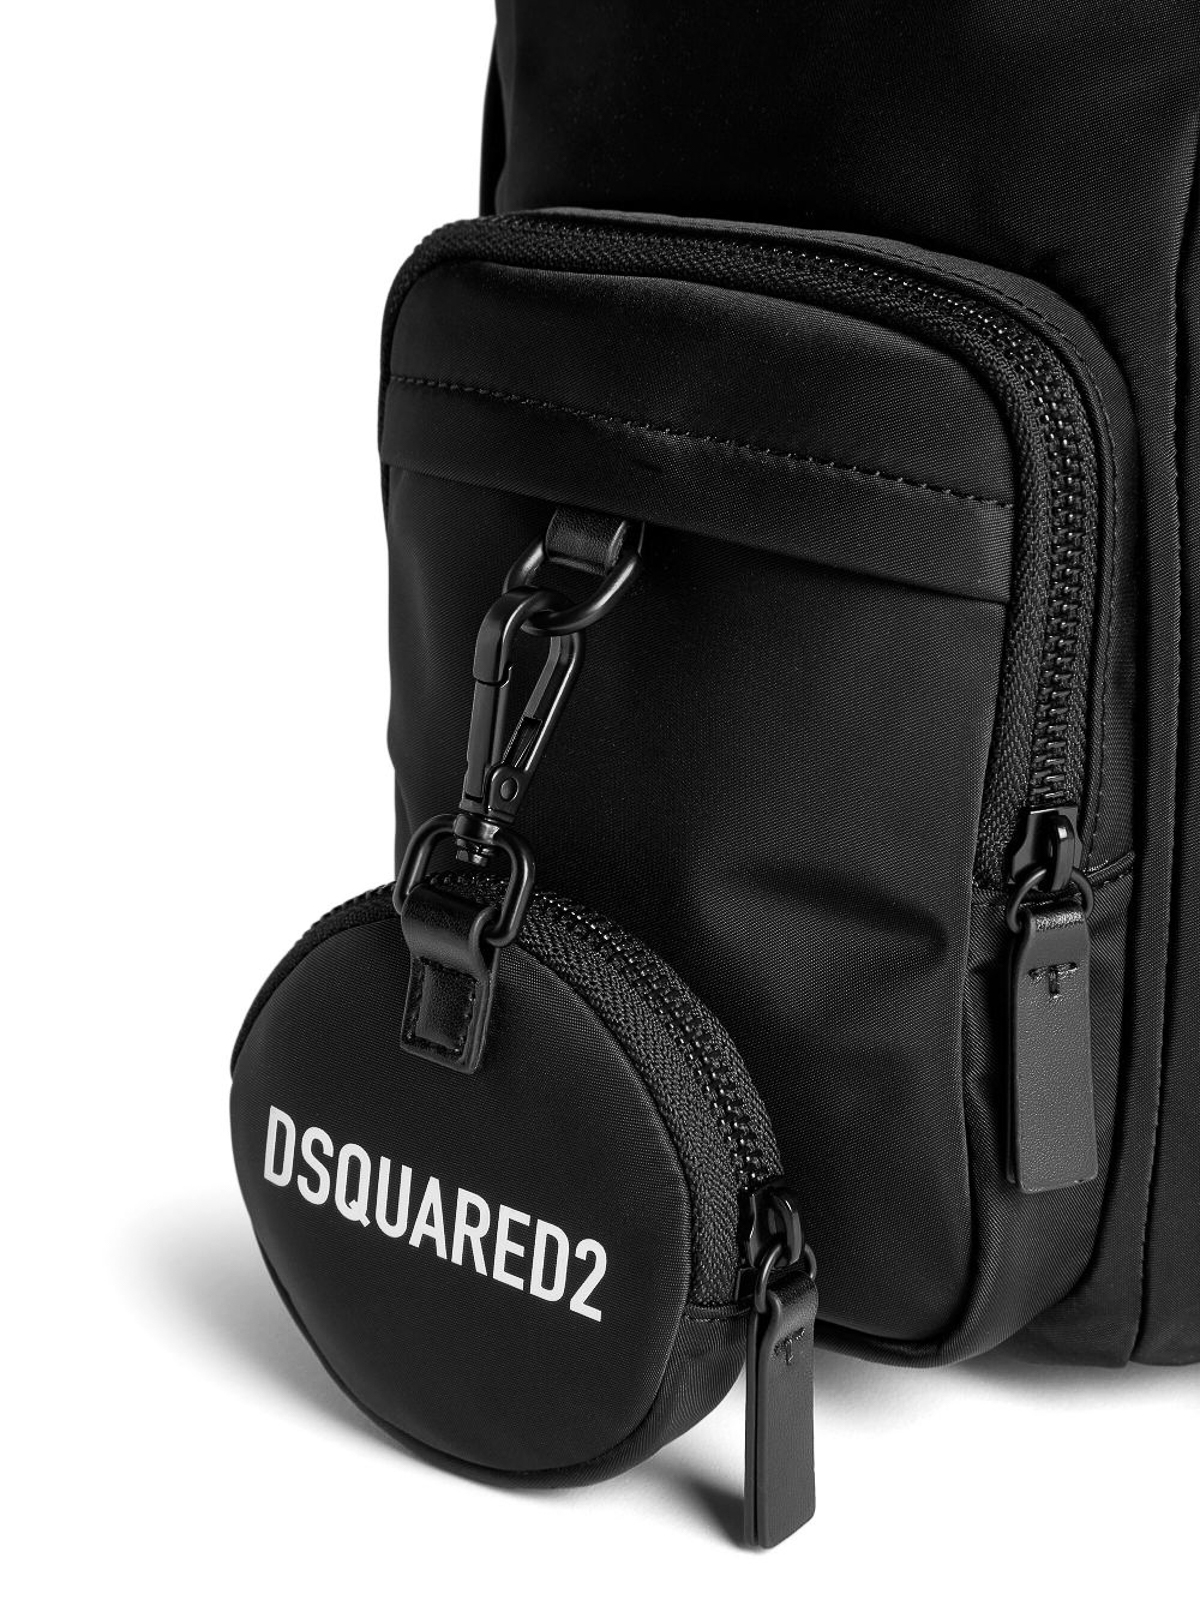 Backpacks Dsquared2 - Icon nylon backpack - BPW003011703199M436